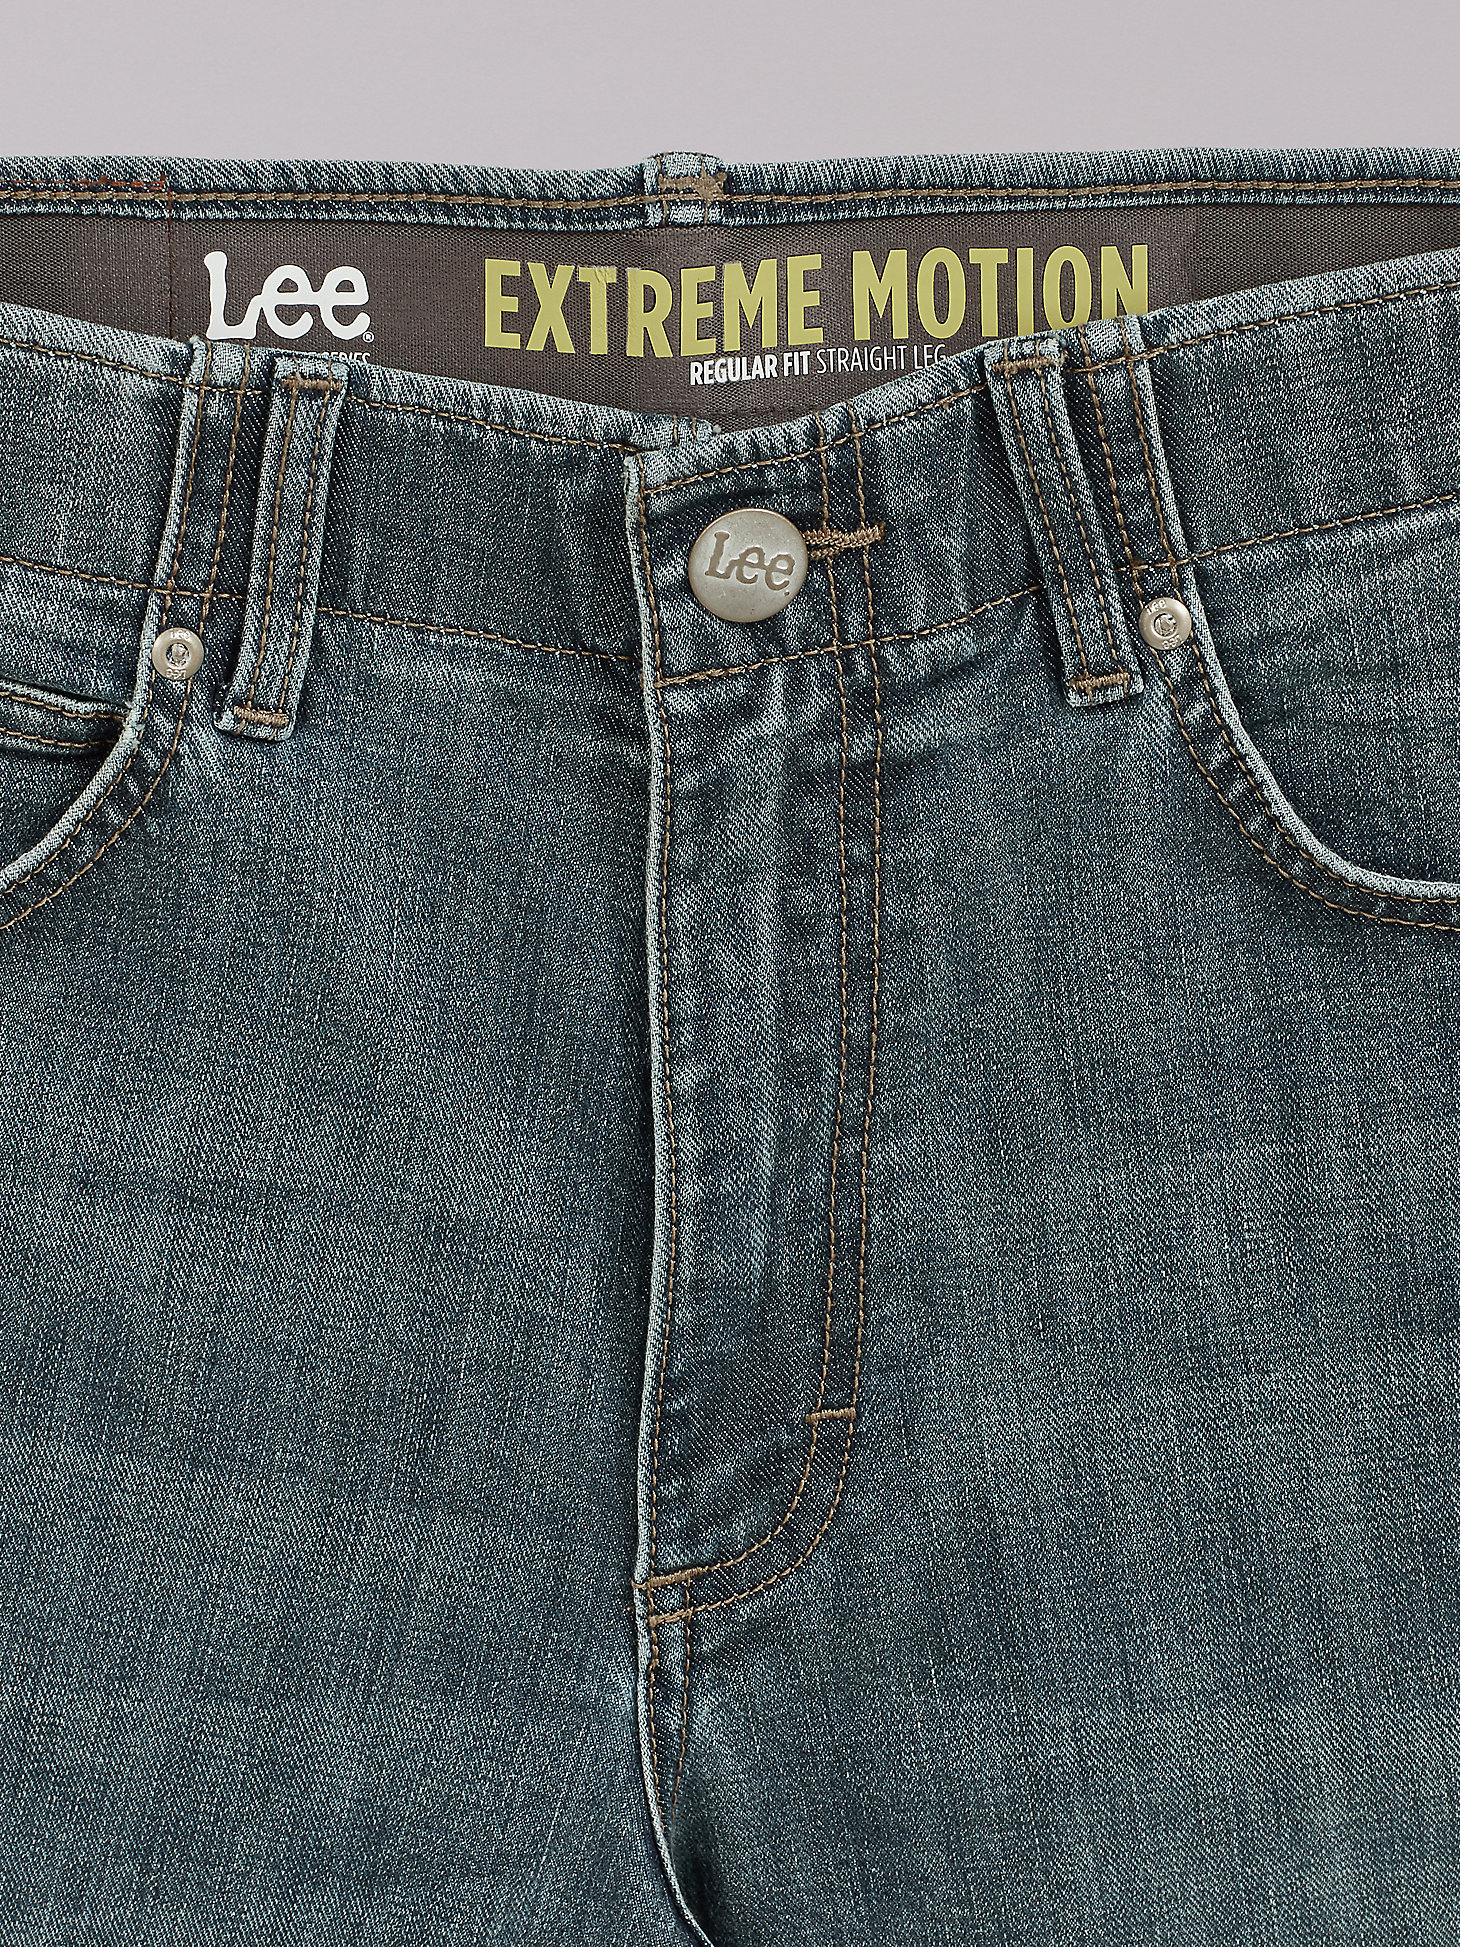 Extreme Motion Straight Leg Jean:Wilson:34:32 | Men's Jeans | Lee®